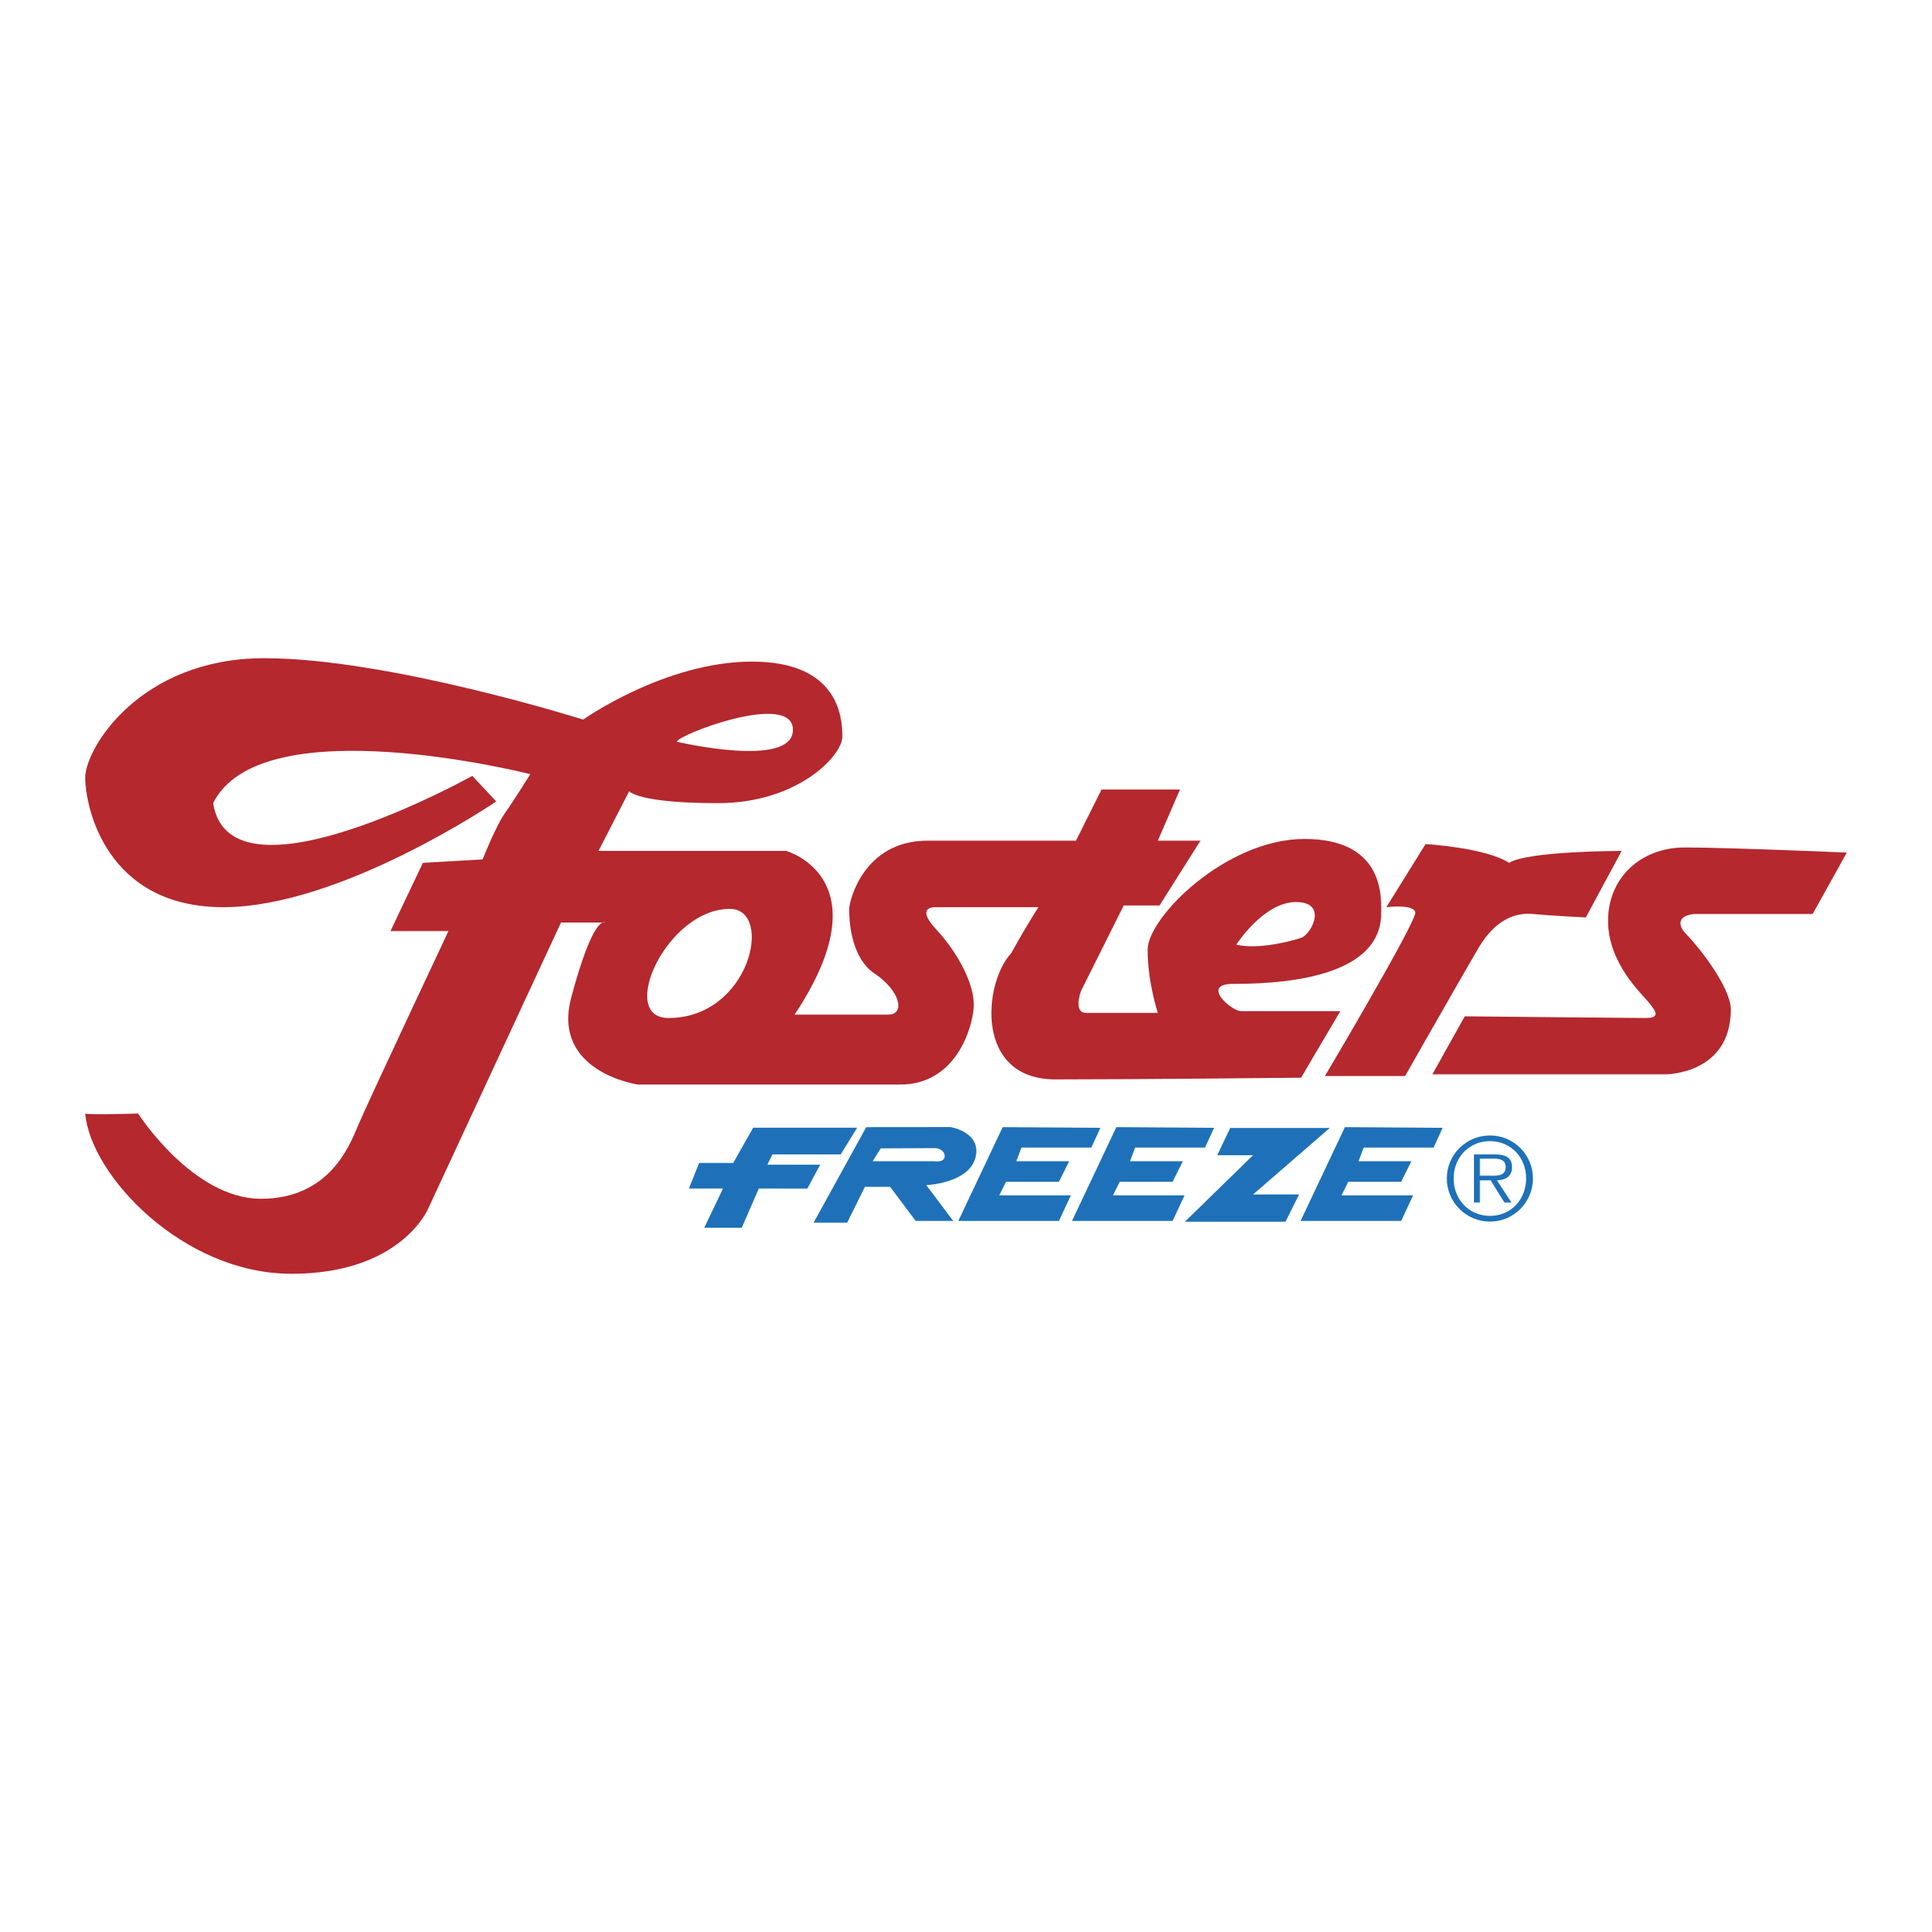 Freeze Logo - Fosters Freeze Logo PNG Transparent & SVG Vector - Freebie Supply